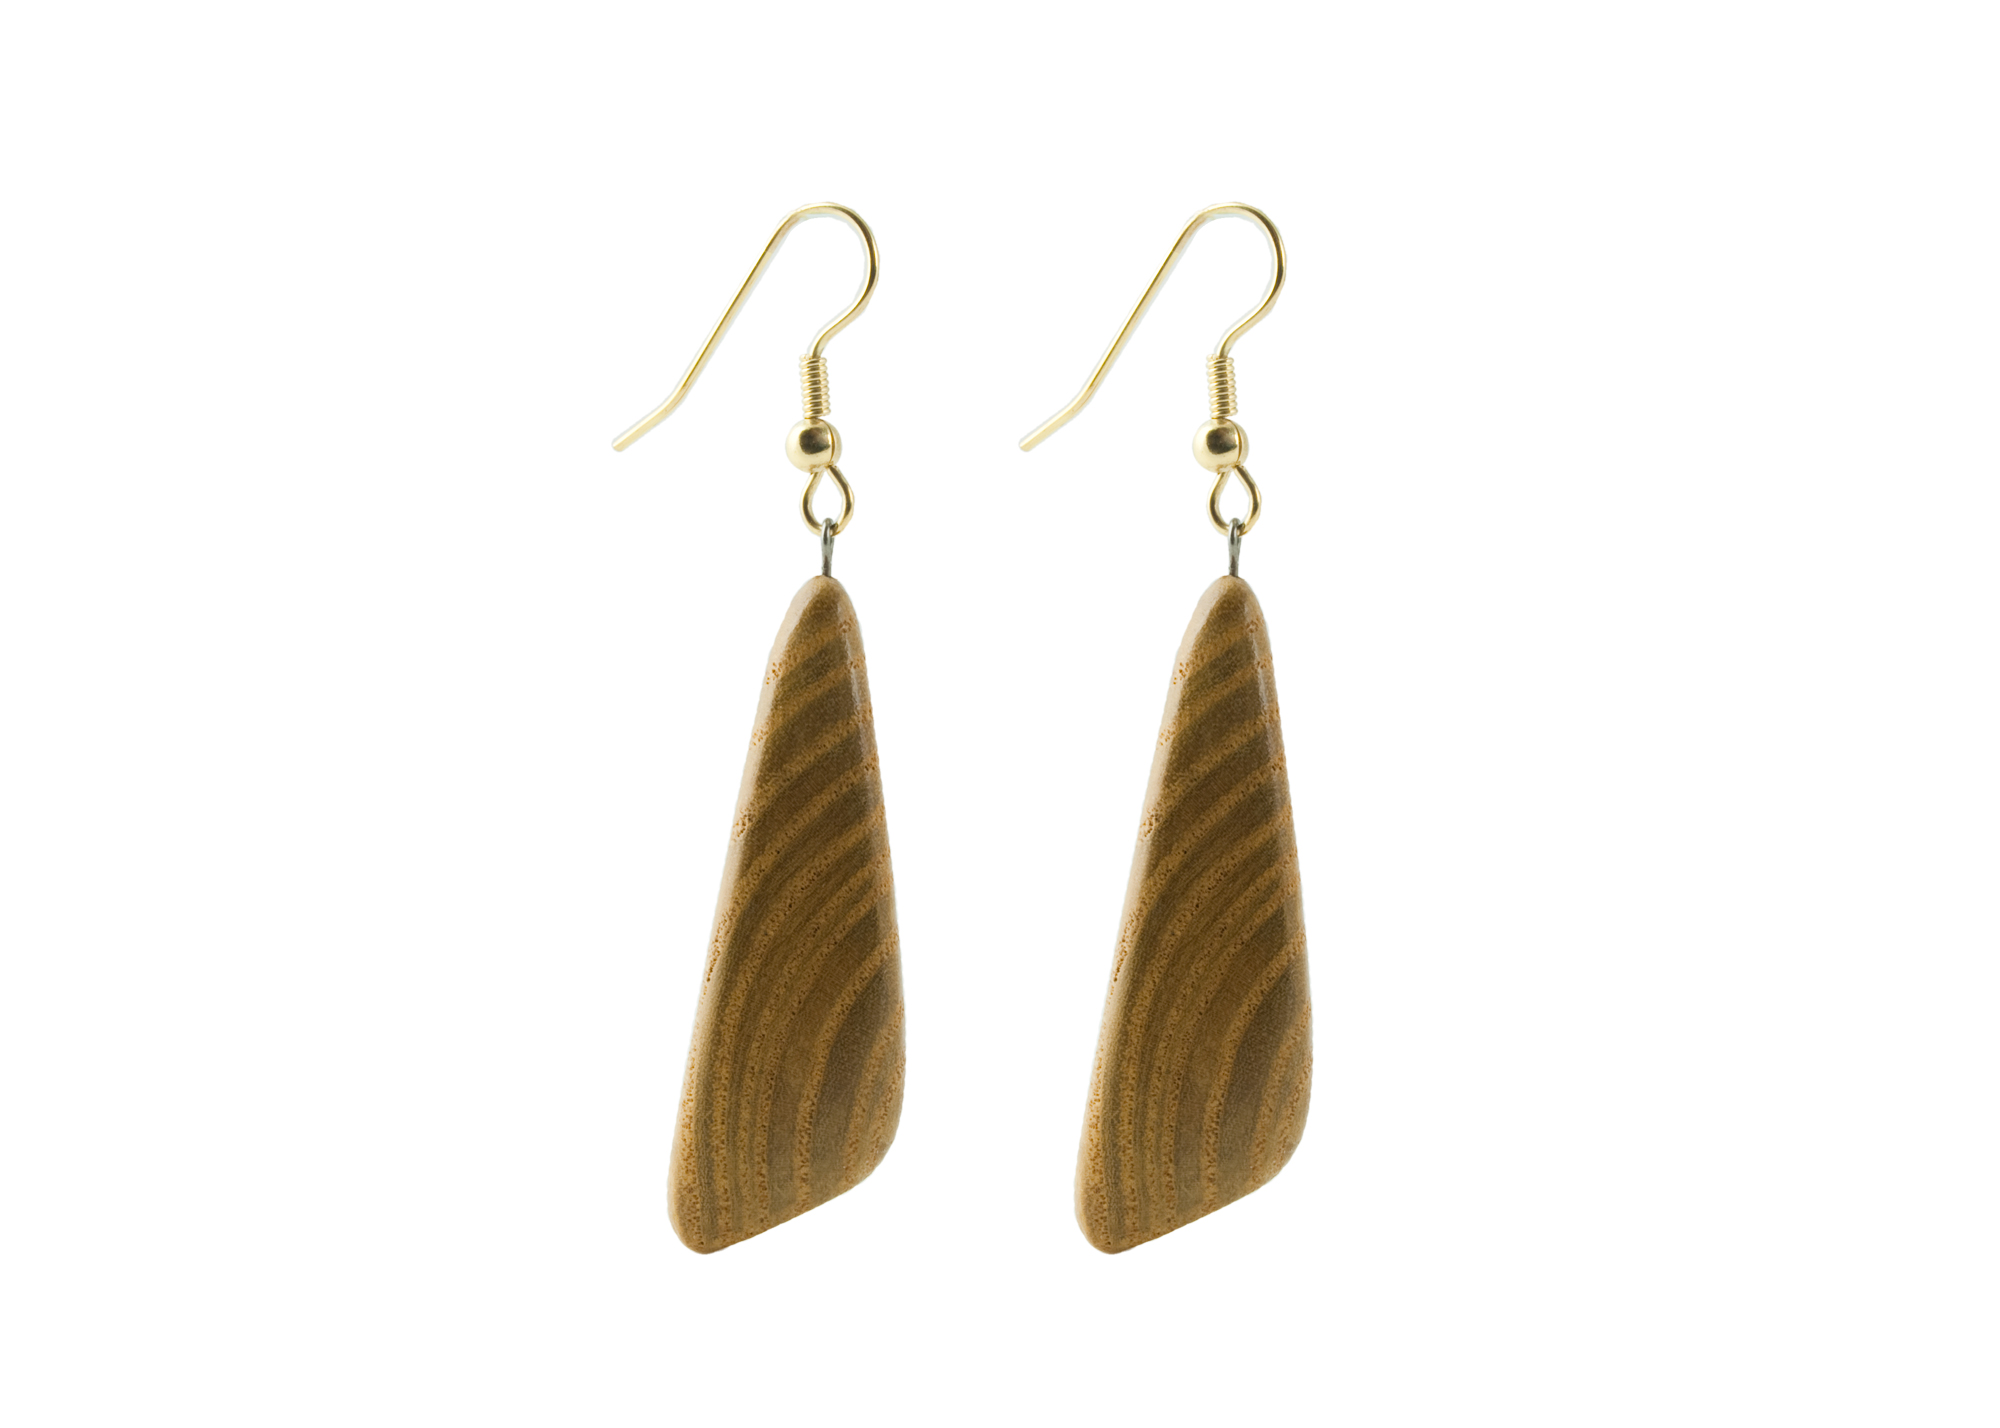 Buy Black Sea Wooden Earrings Asymmetrical Light at GoldenCockerel.com